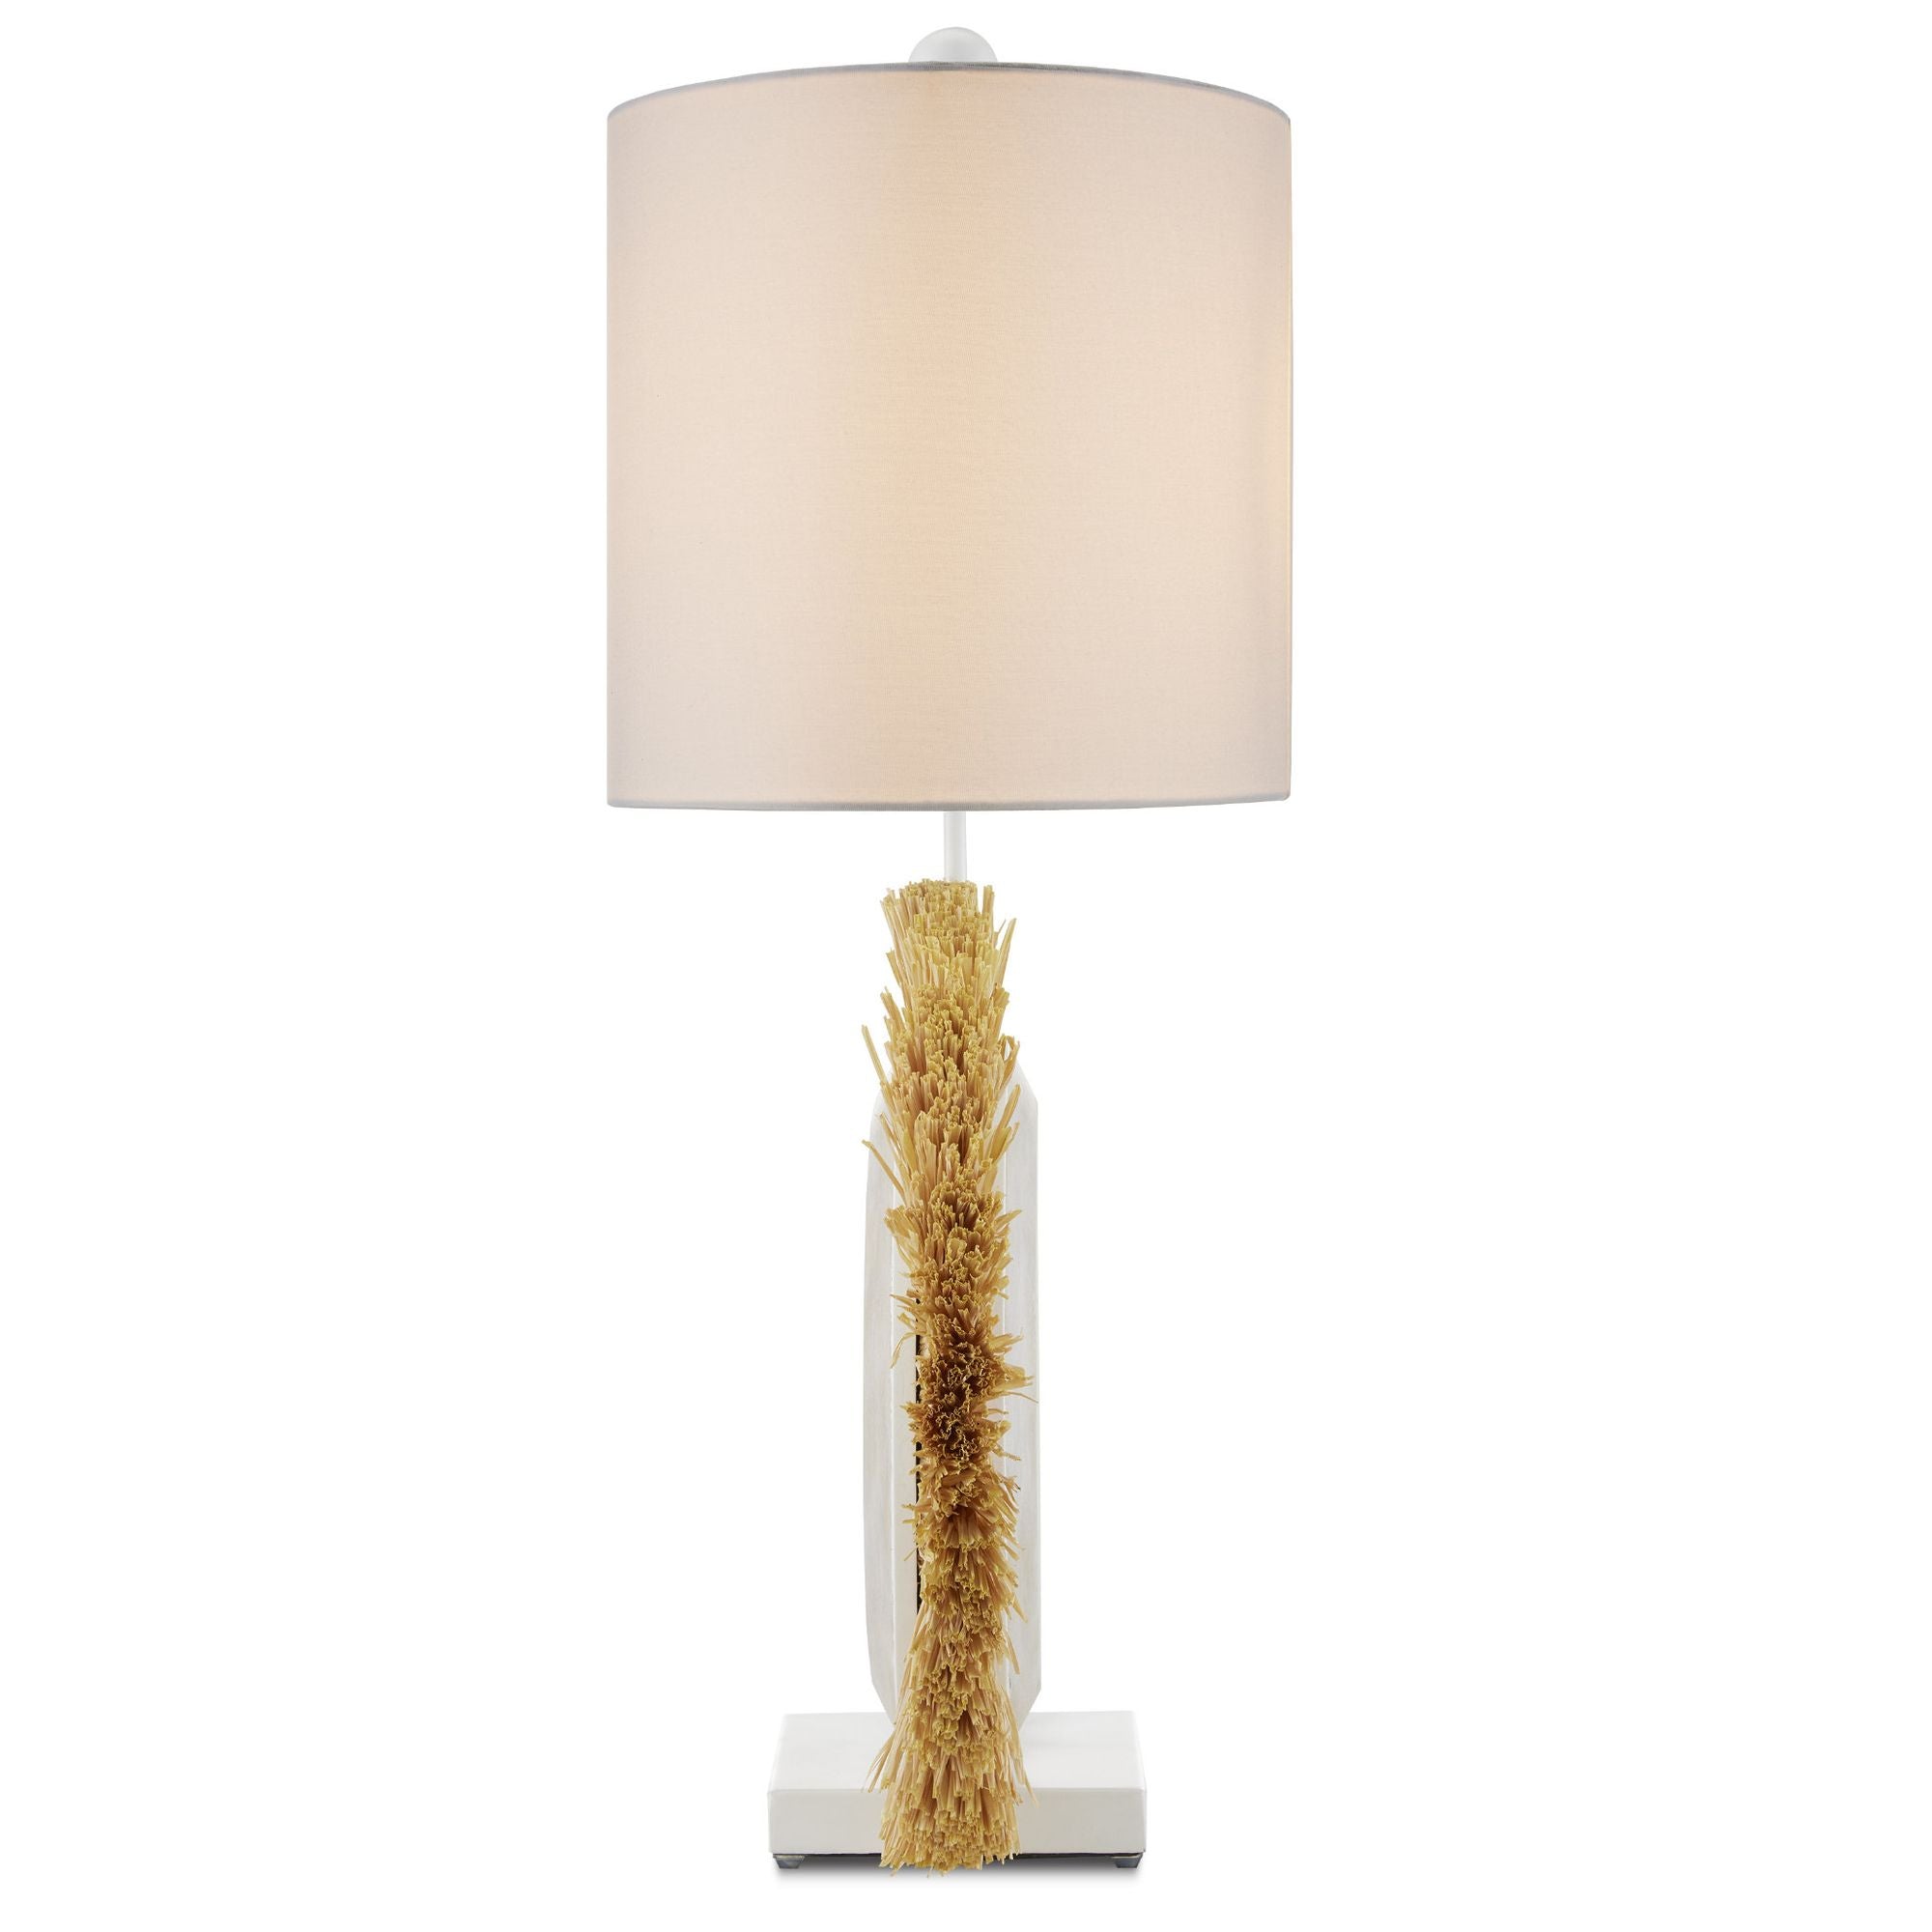 Seychelles Table Lamp - White/Sandstone/Natural